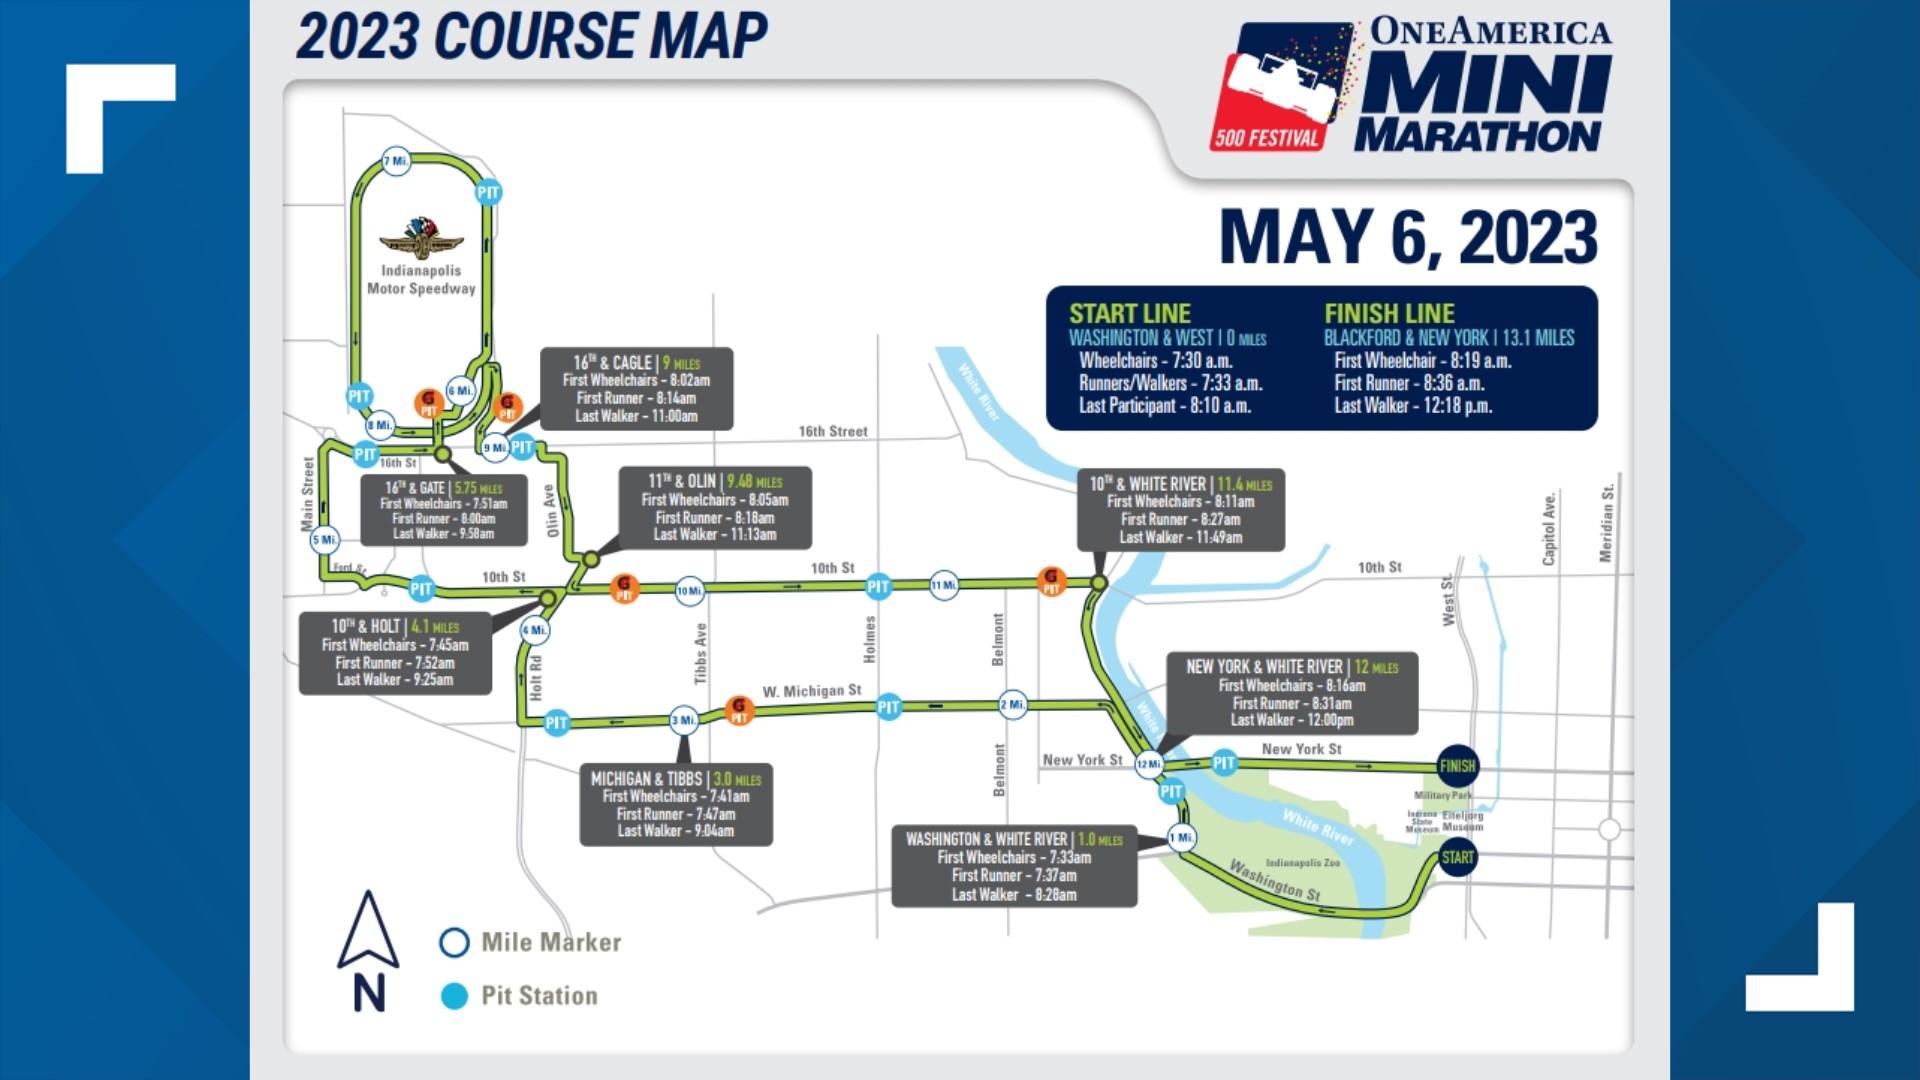 MiniMarathon street closures and course maps